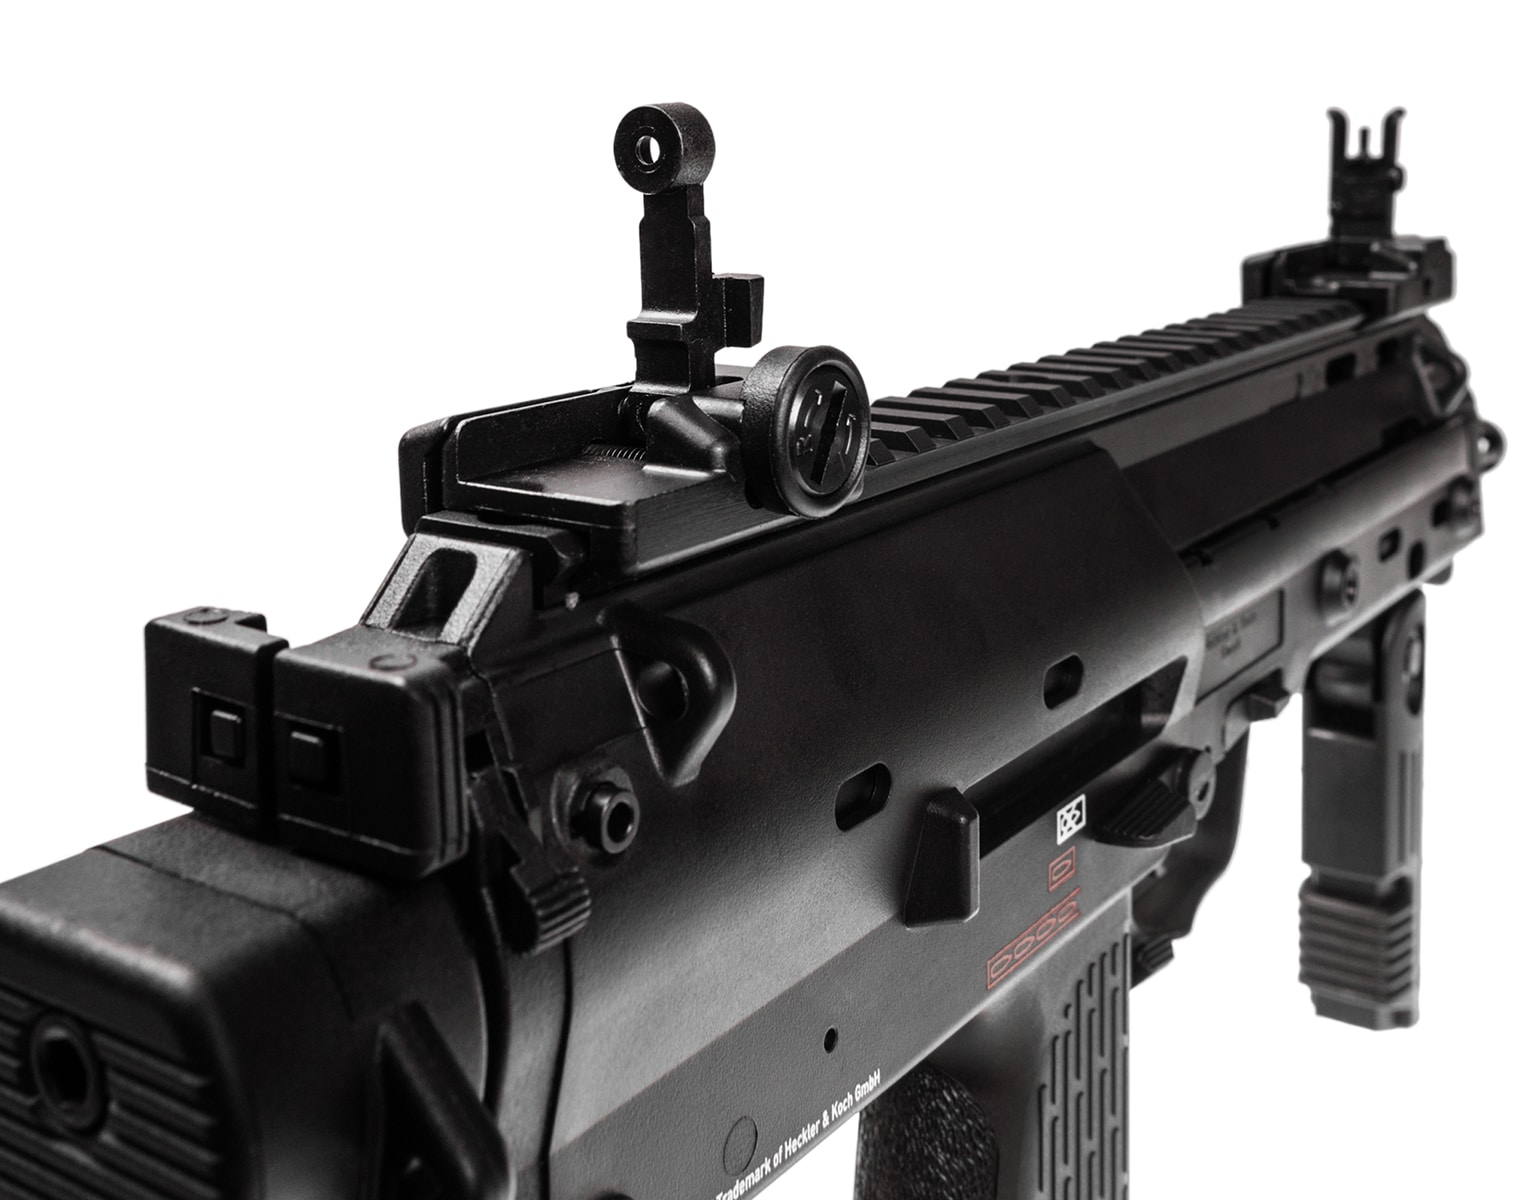 Pistolet maszynowy GBB Heckler&Koch MP7 A1